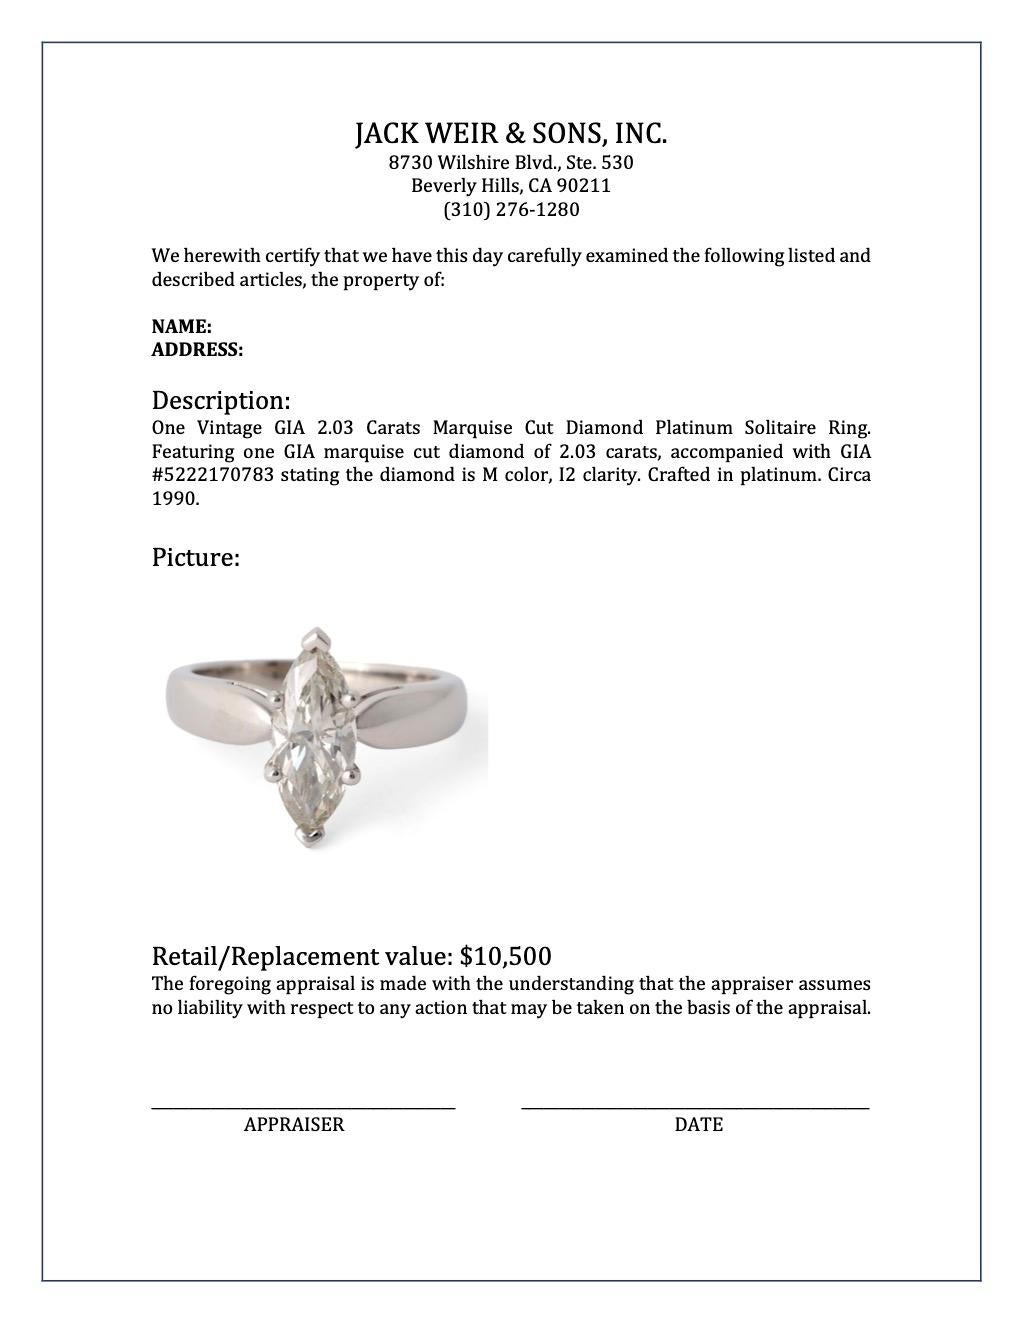 Vintage GIA 2.03 Carats Marquise Cut Diamond Platinum Solitaire Ring 4